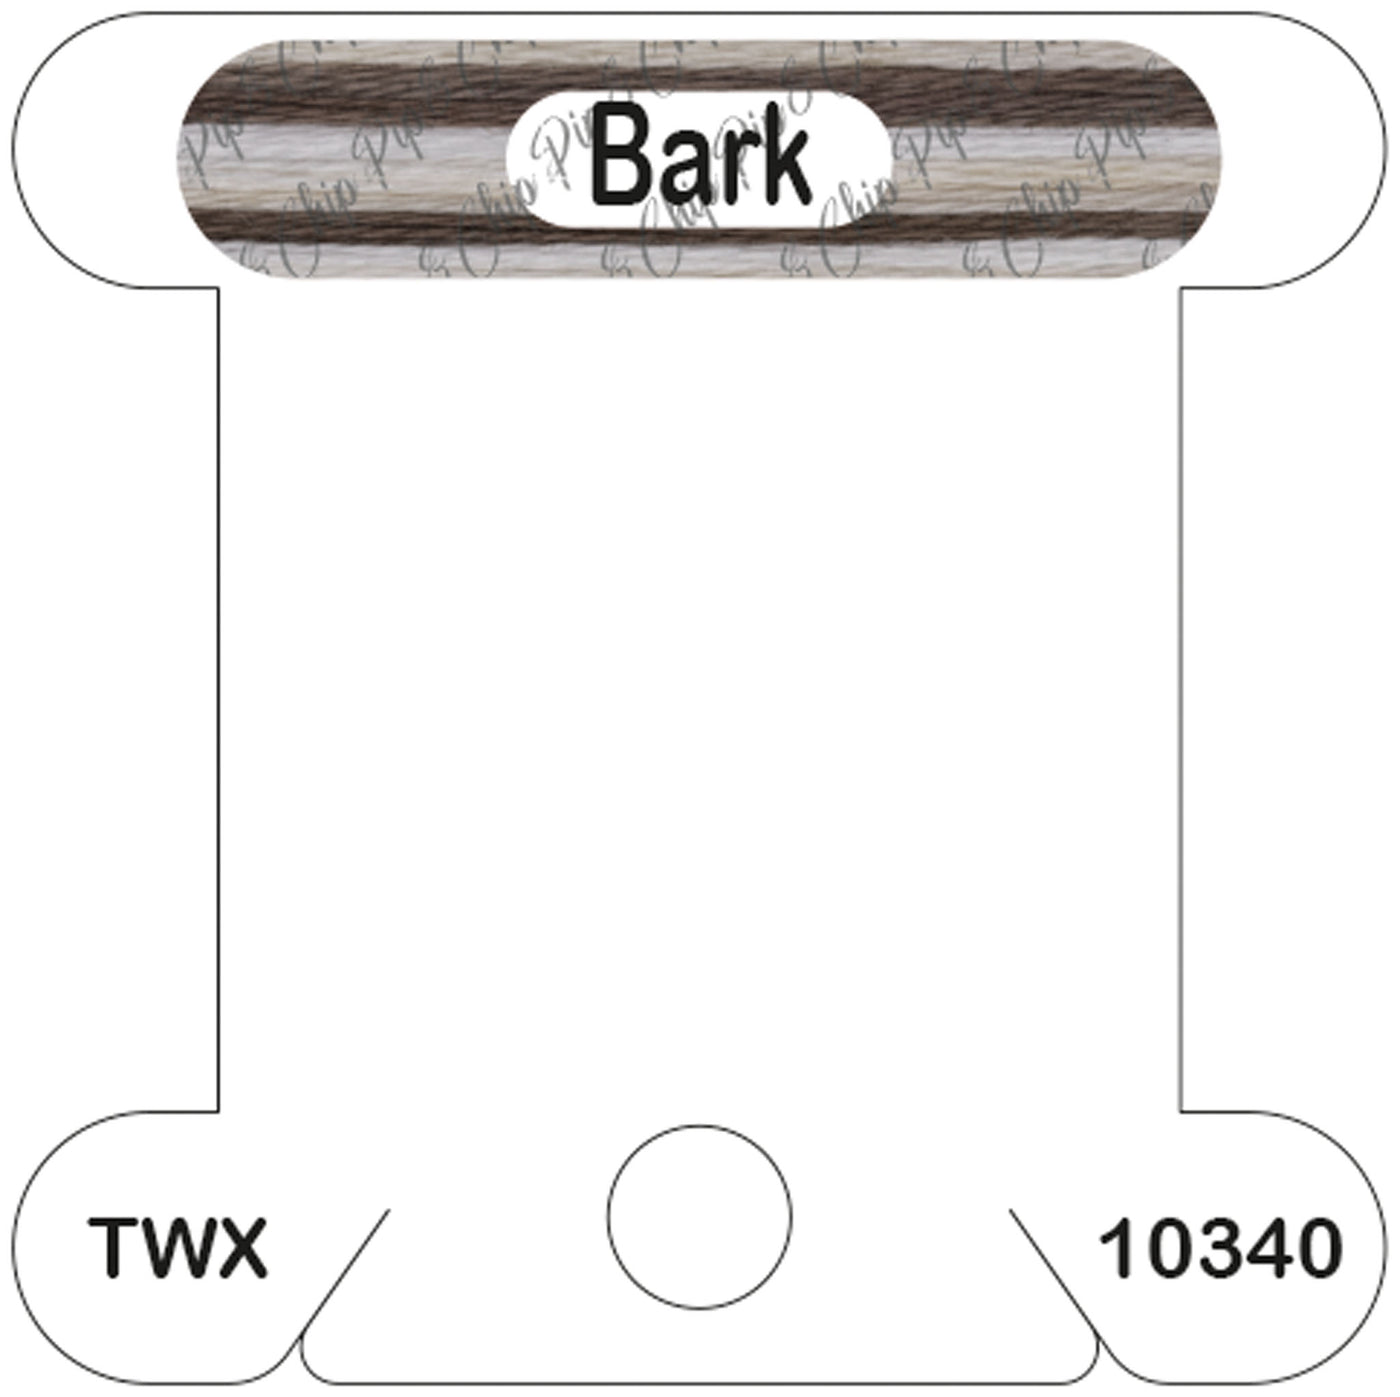 ThreadworX Bark acrylic bobbin